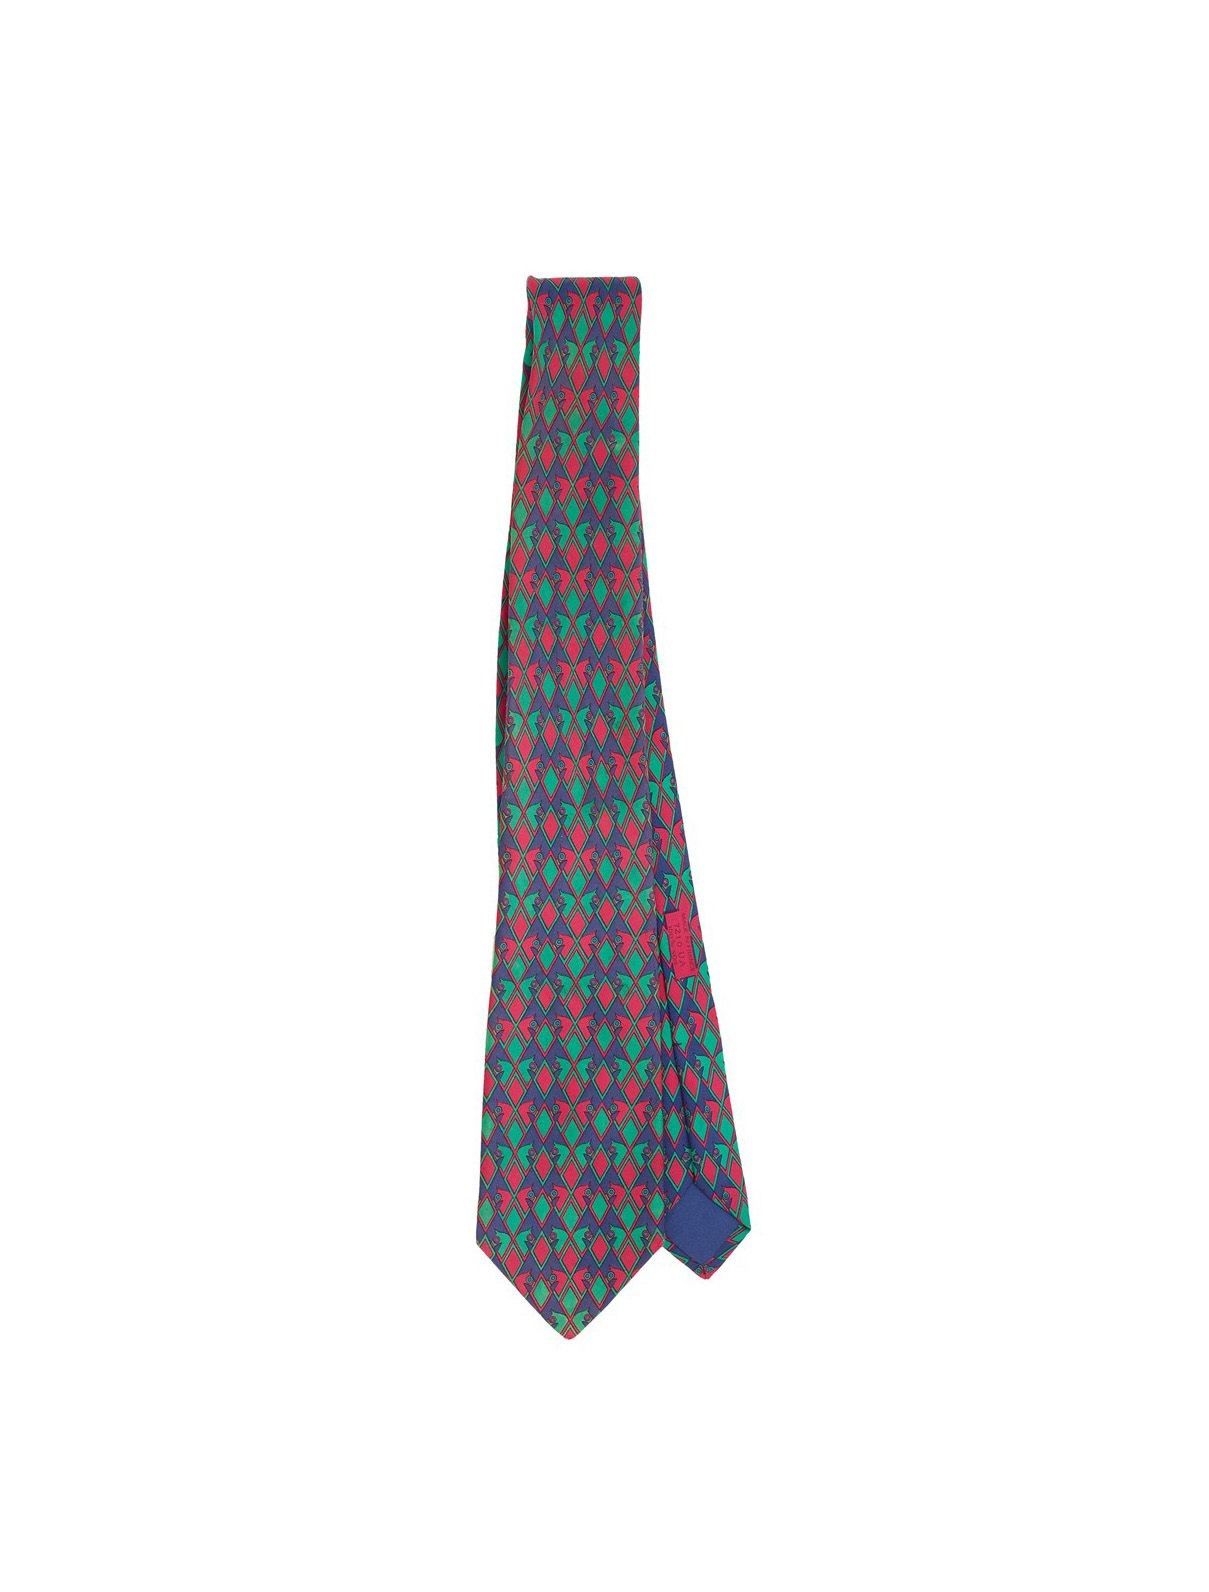 HERMES Cravatta Hermès in seta. Buone condizioni.

Hermès silk tie. Good conditi&hellip;